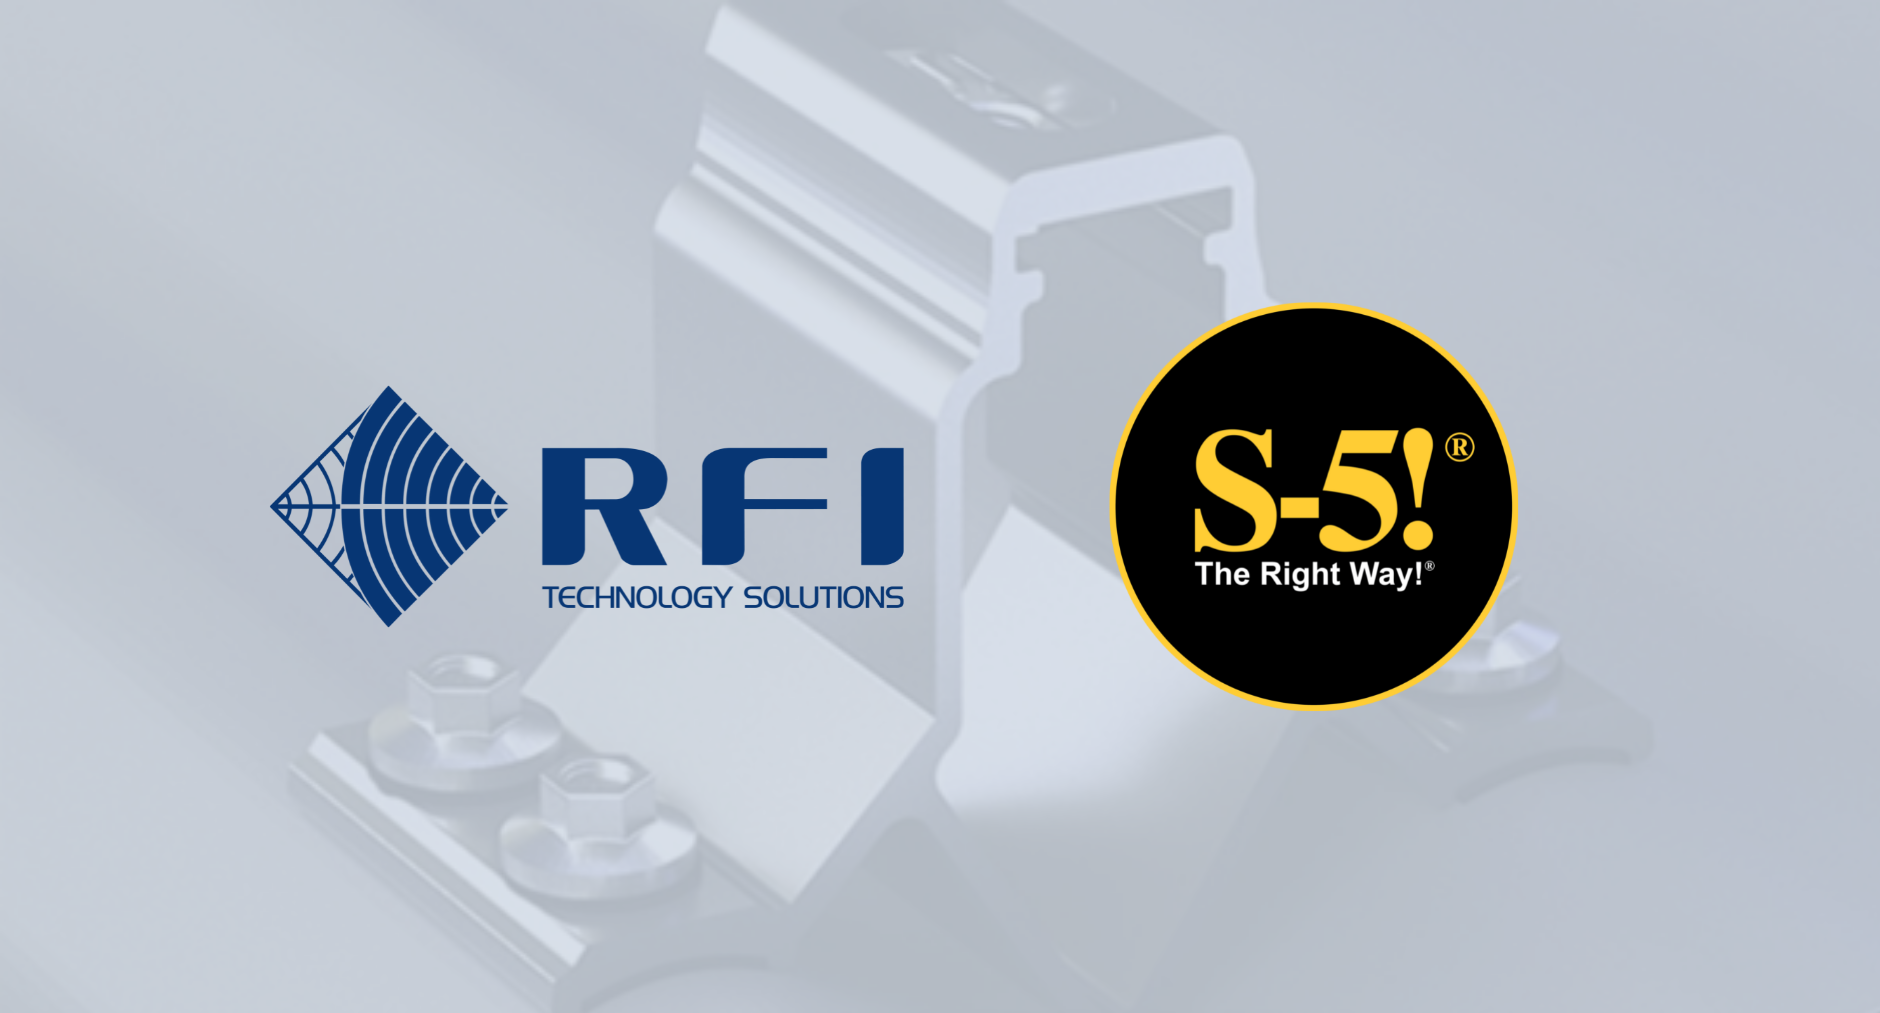 RFI Technology Solutions & S-5! partnership announcement